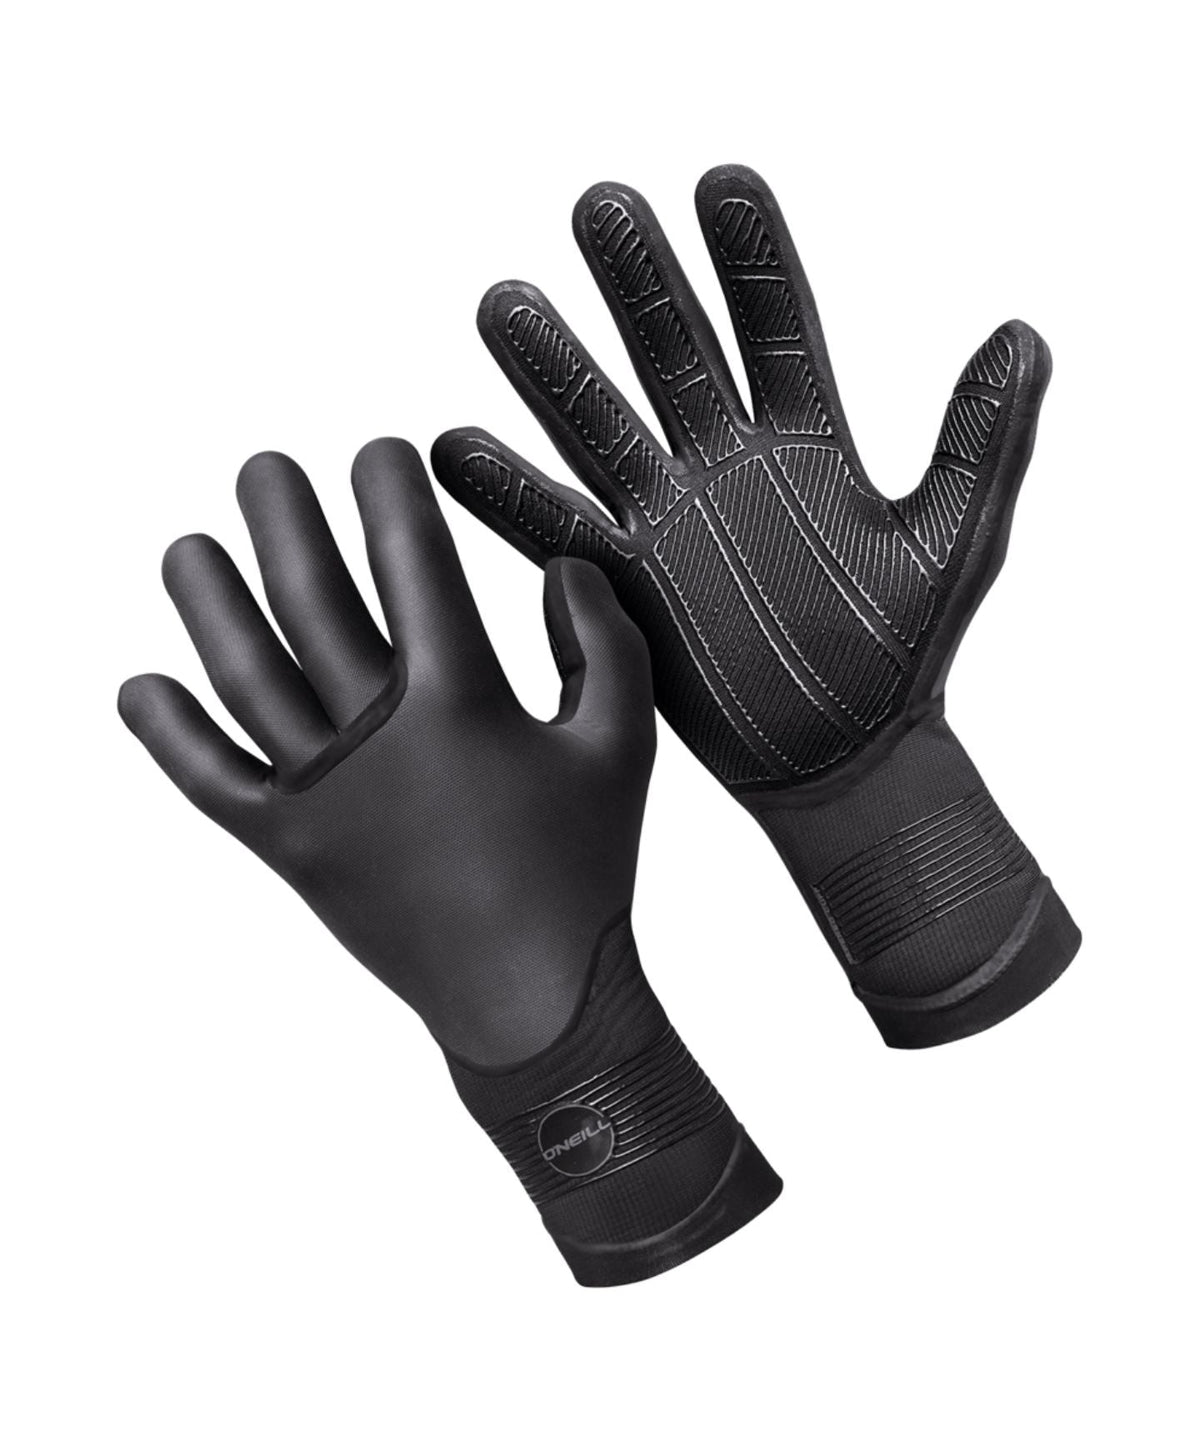 Psycho Tech 5mm Wetsuit Glove - Black